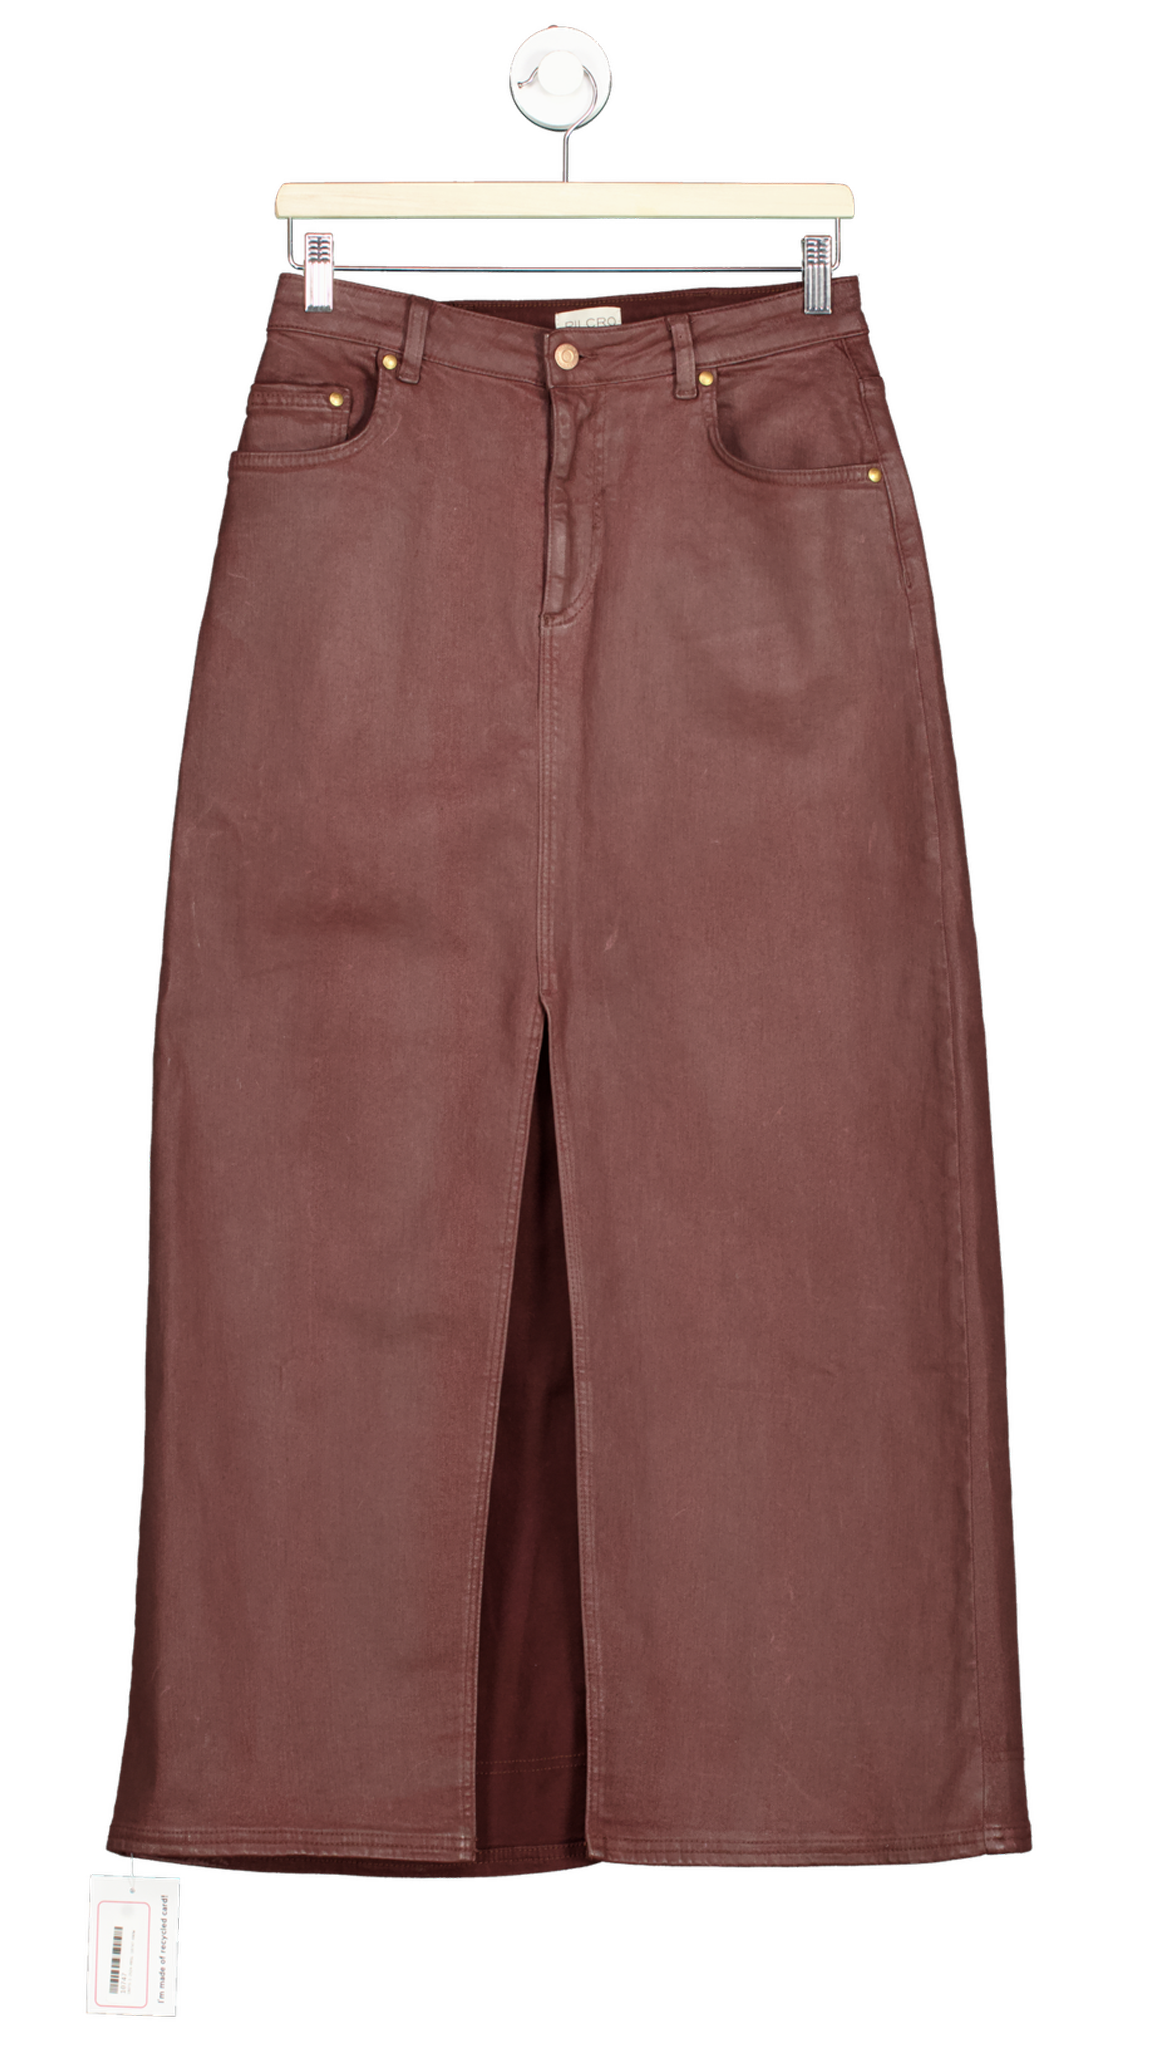 Anthropologie Pilcro Burgundy Denim Midi Coated Skirt Size UK 12